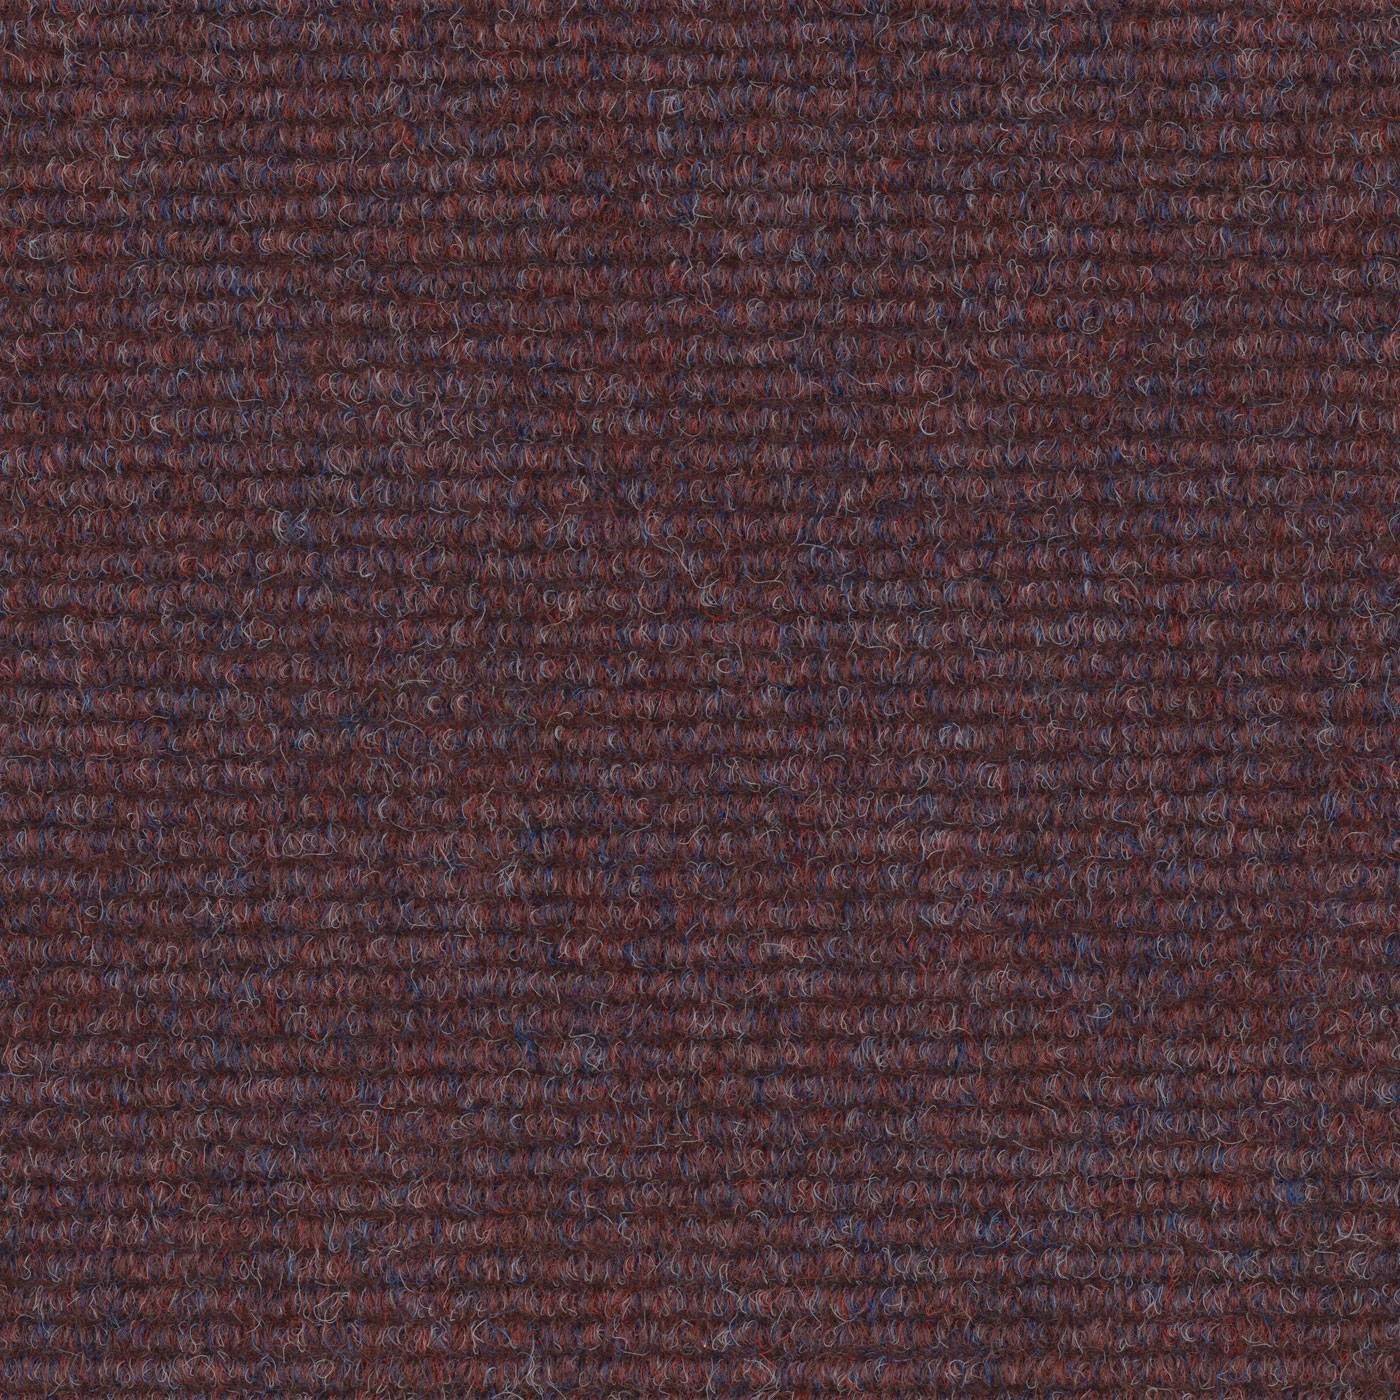 Rawson Carpet Tiles Freeway Mulberry FRT528